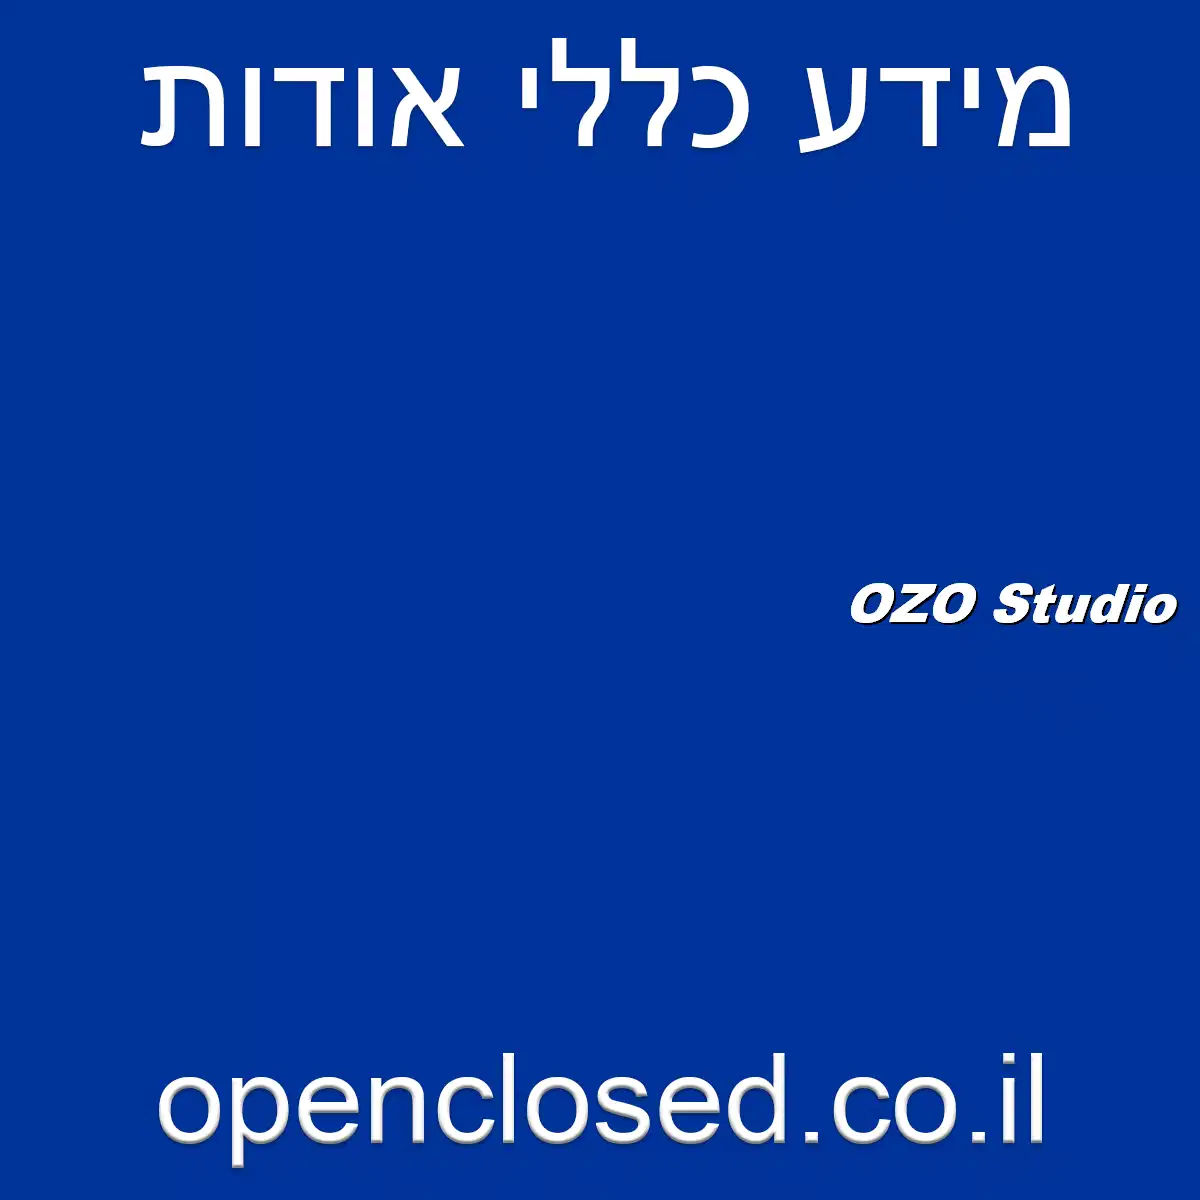 OZO Studio